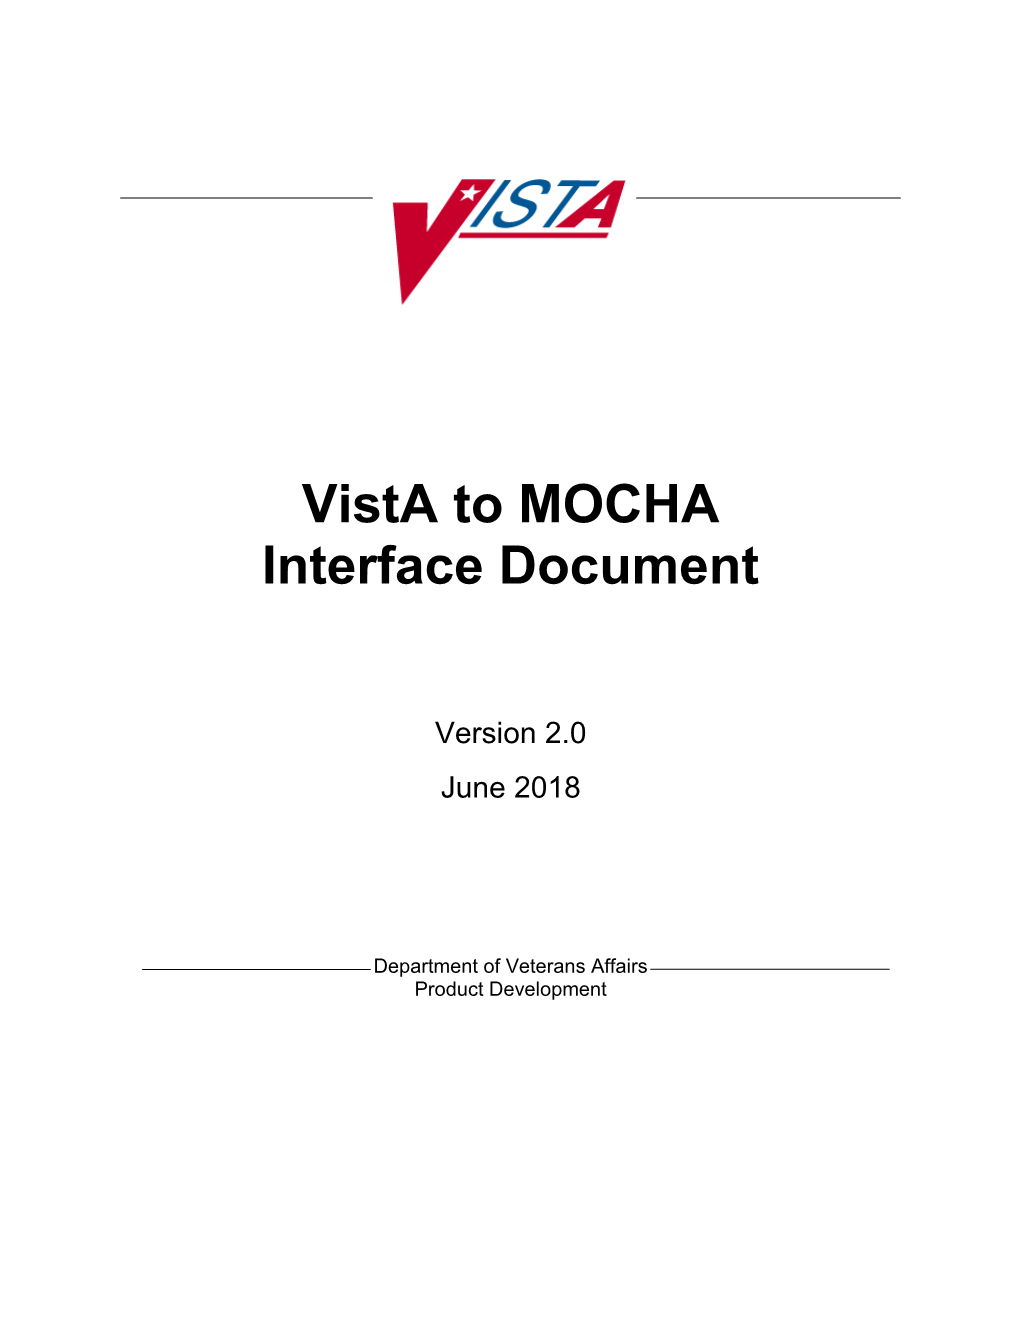 Vista to MOCHA Interface Document